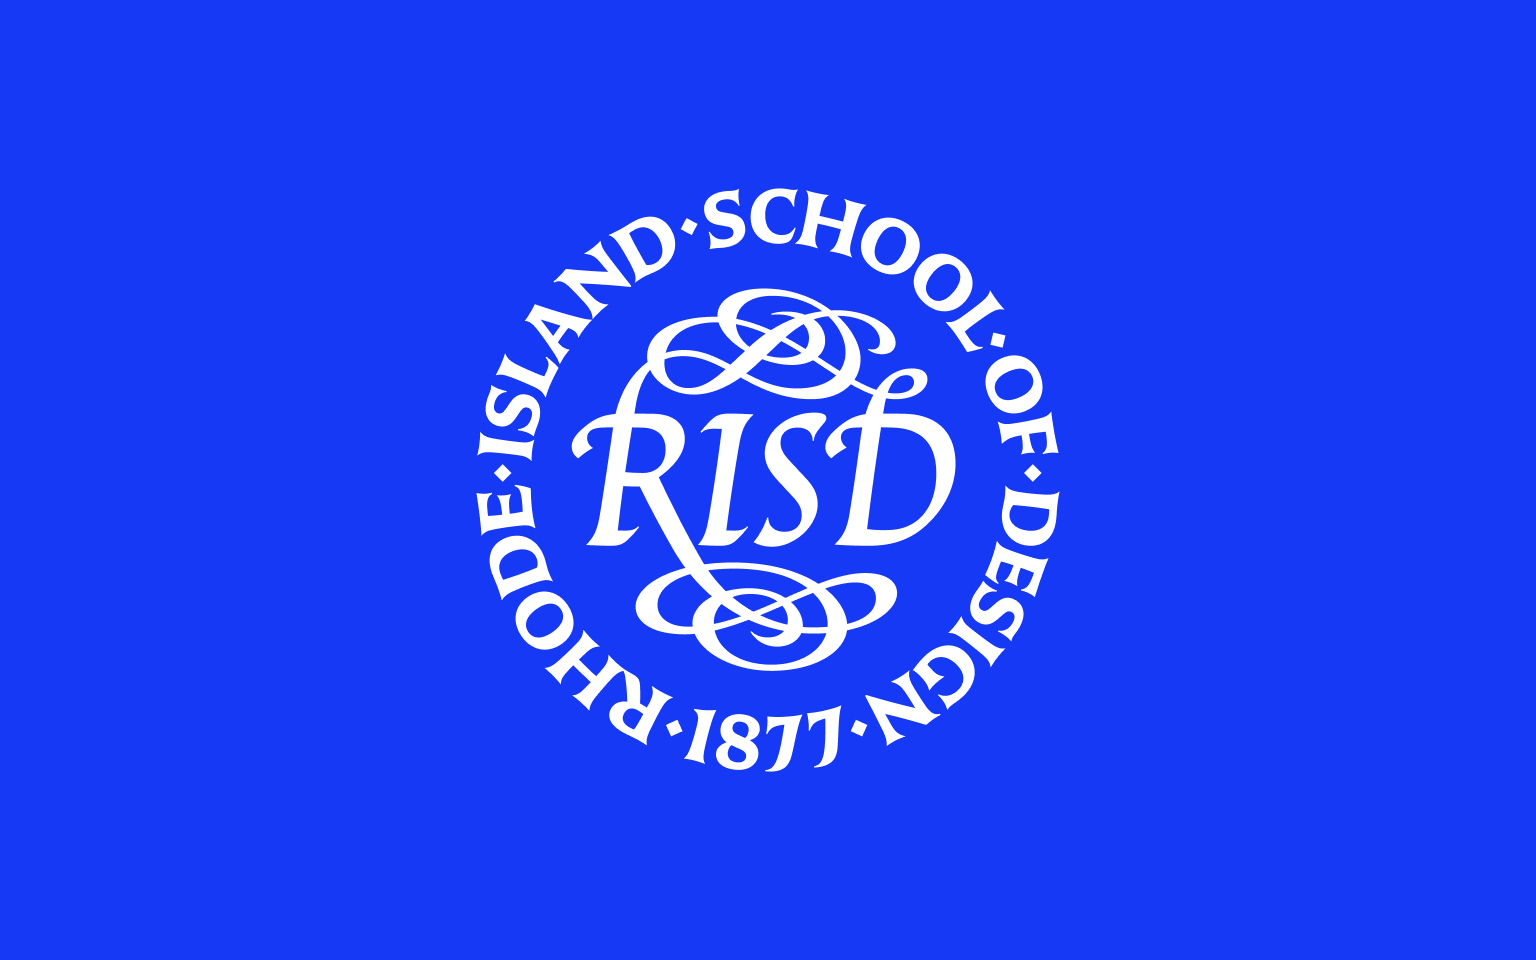 RISD Live stream